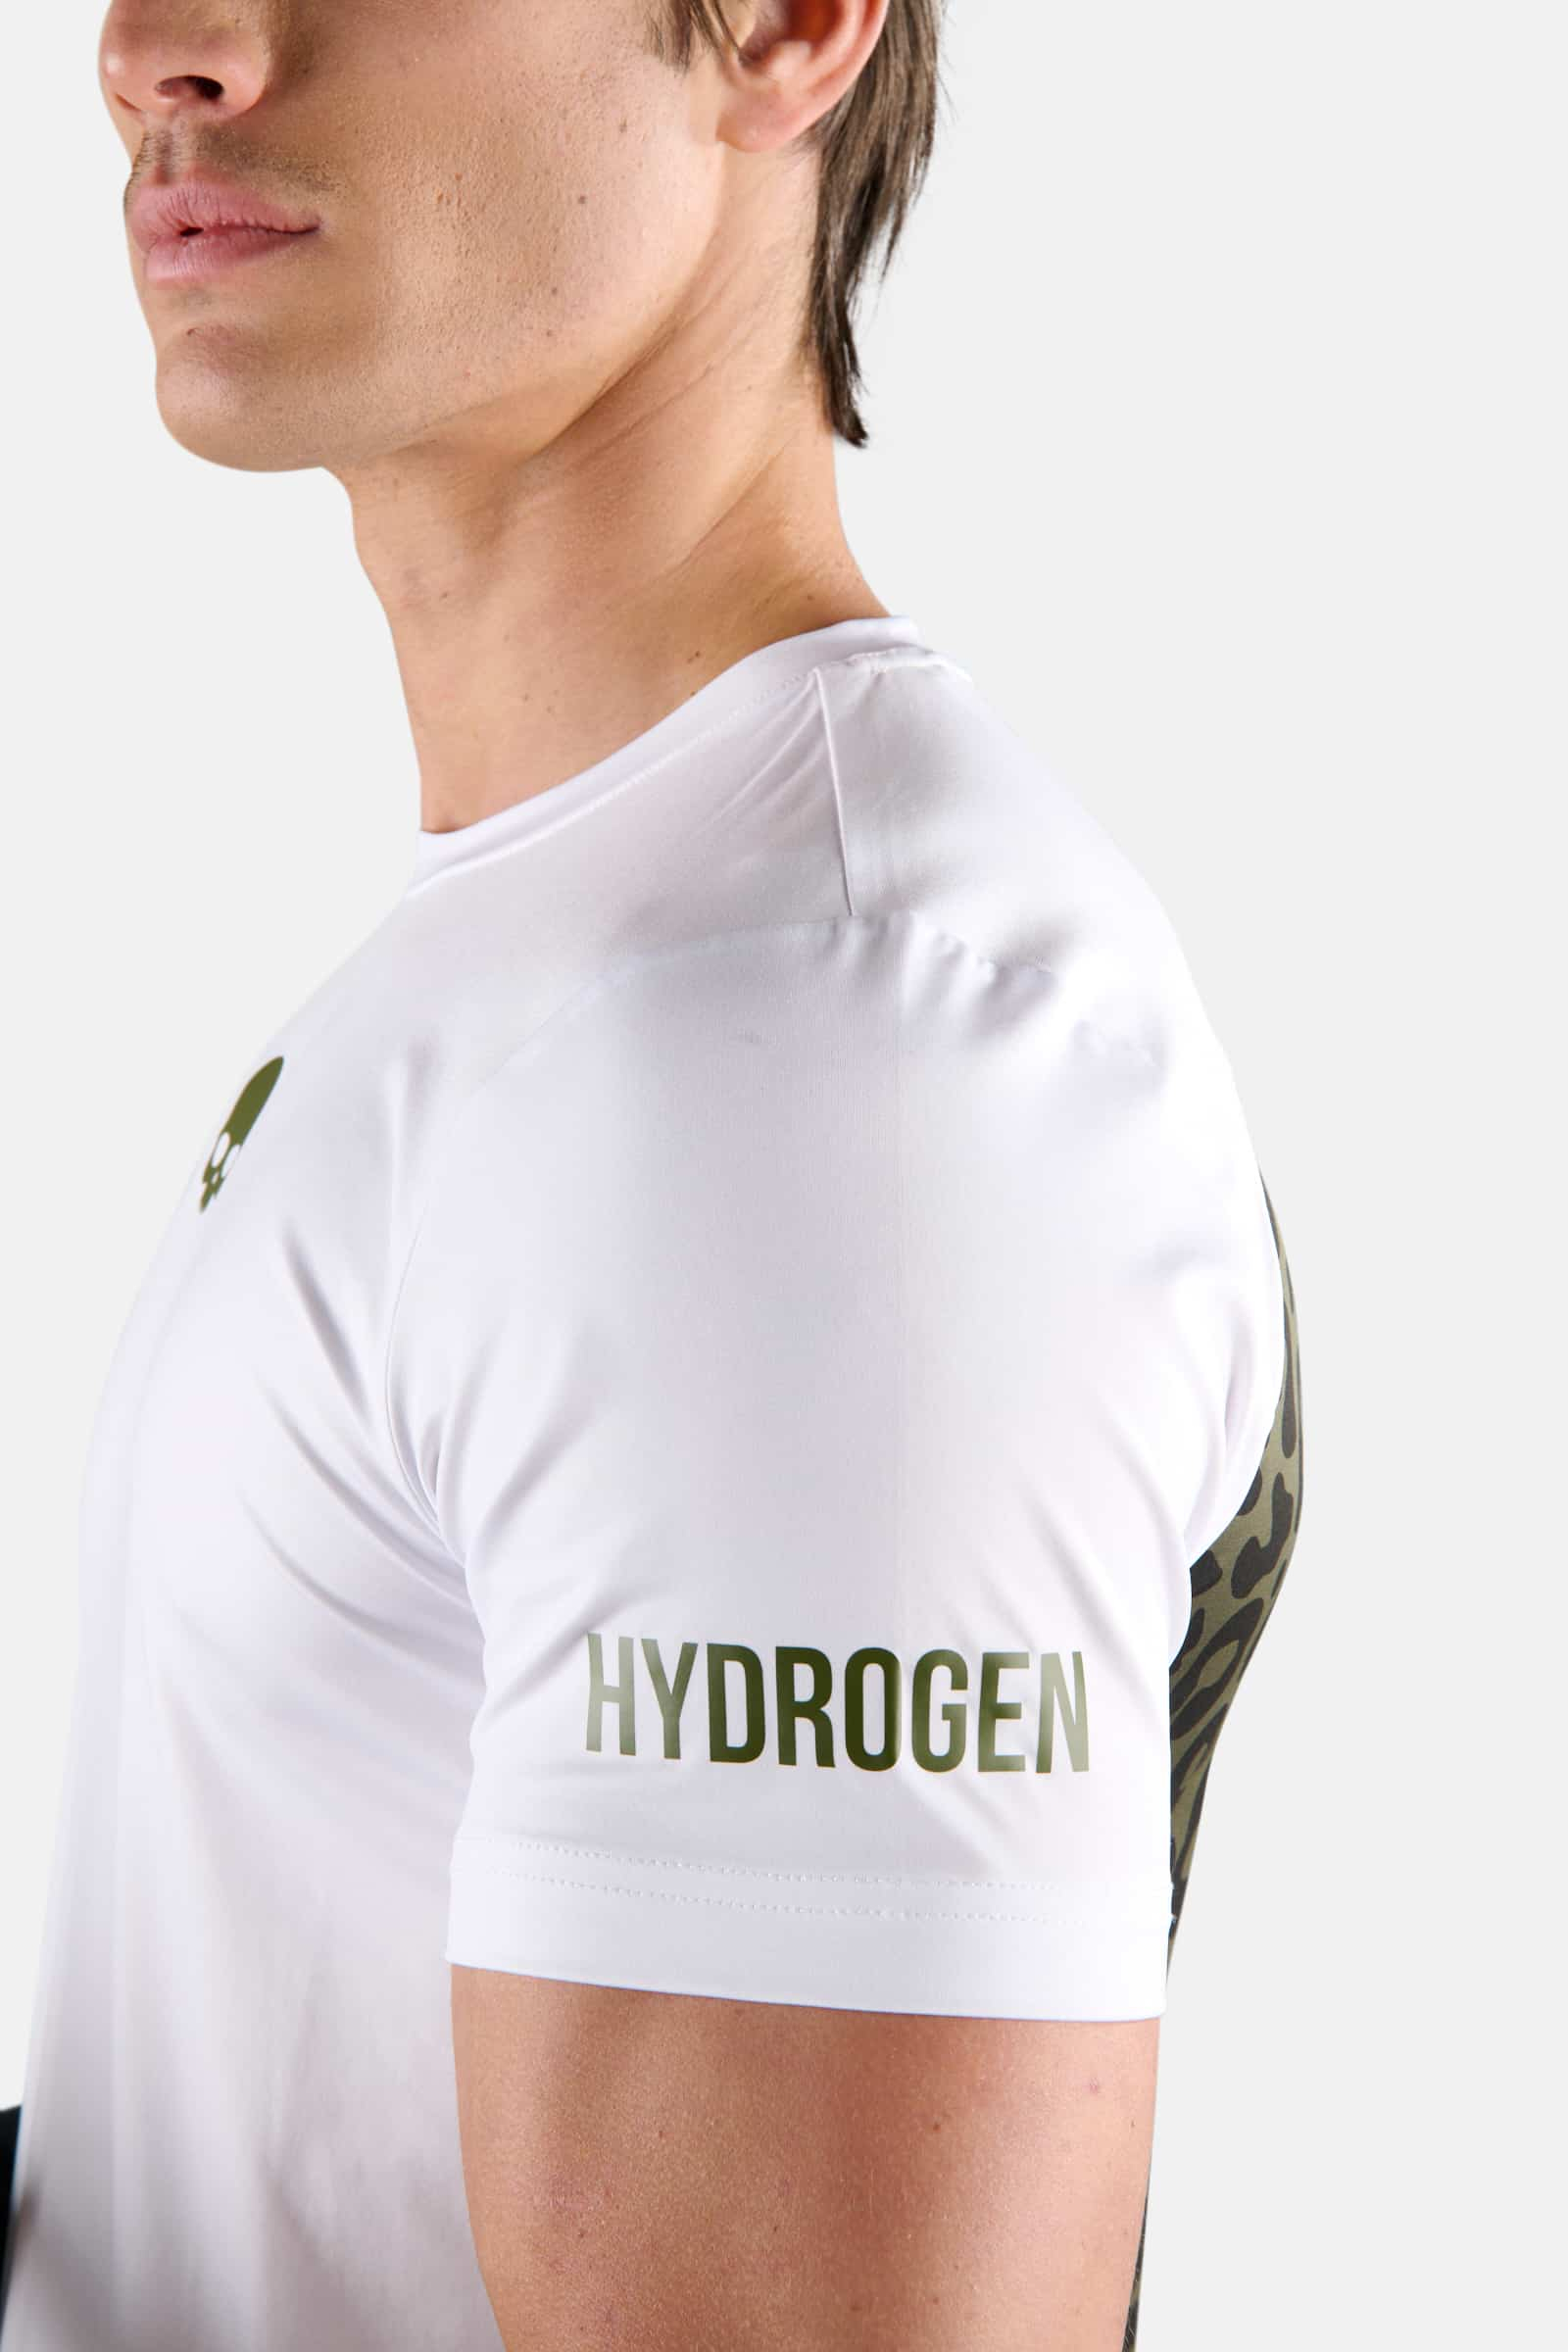 T-SHIRT TECNICA PANTHER - WHITE,MILITARY GREEN - Abbigliamento sportivo | Hydrogen